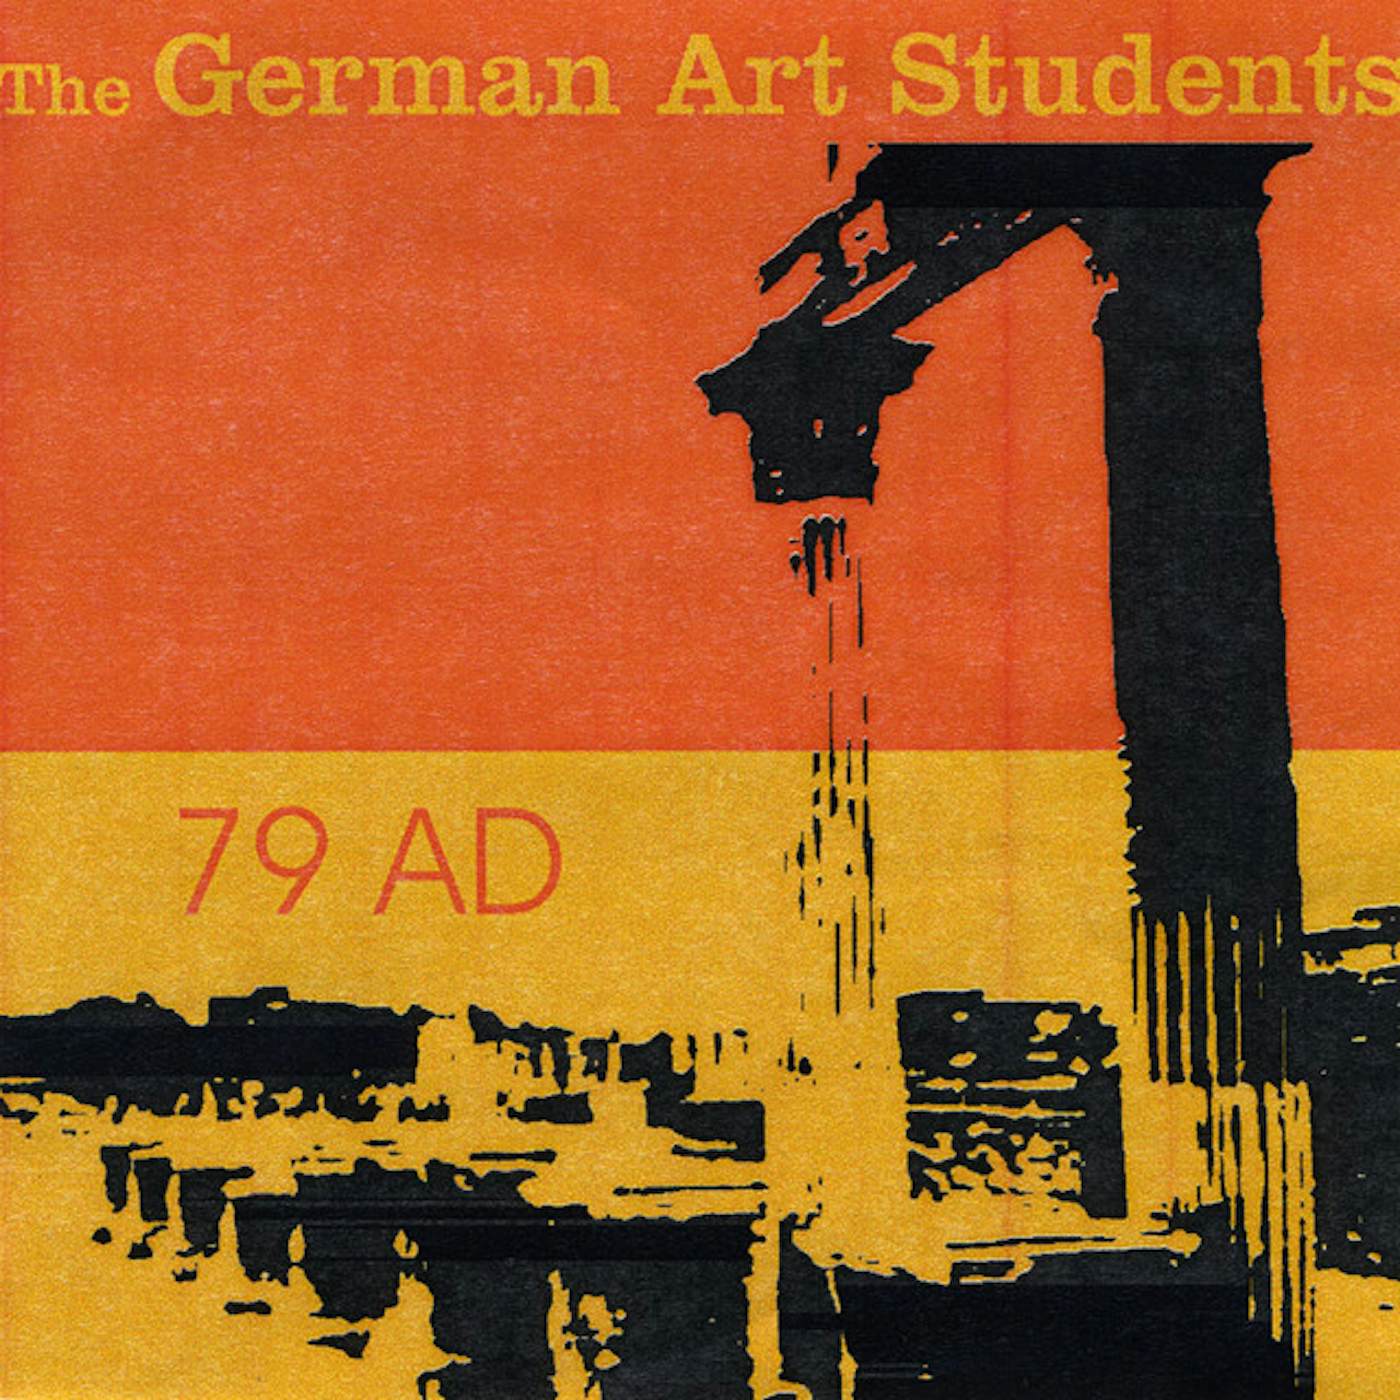 The German Art Students 79 AD Vinyl Record